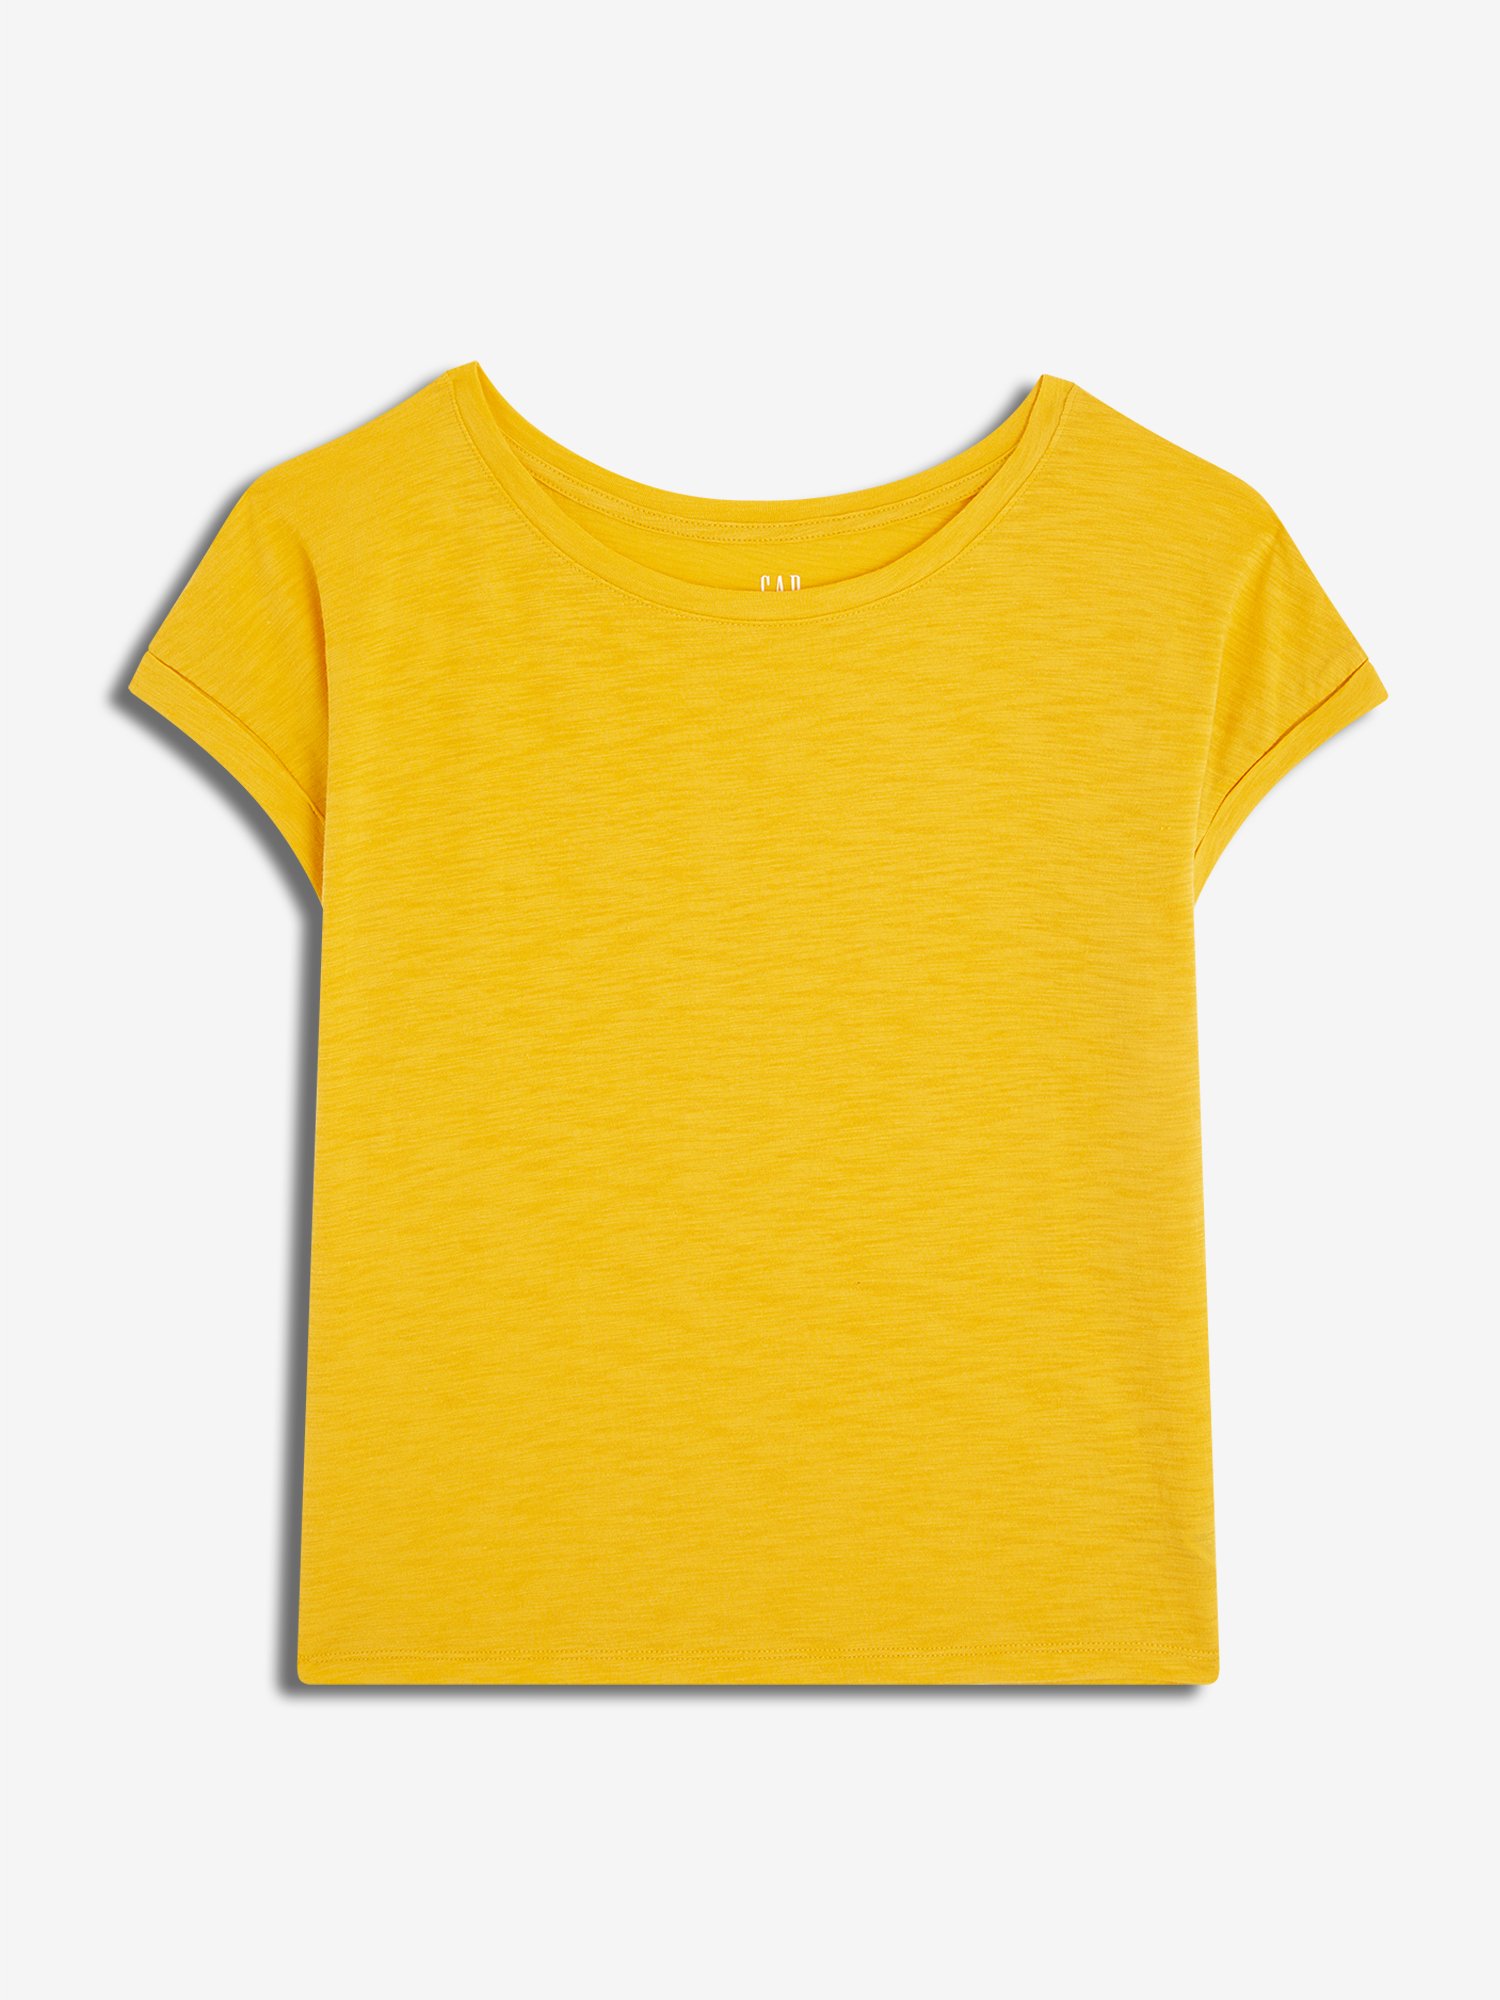 Kadın Kısa Kollu T-shirt product image